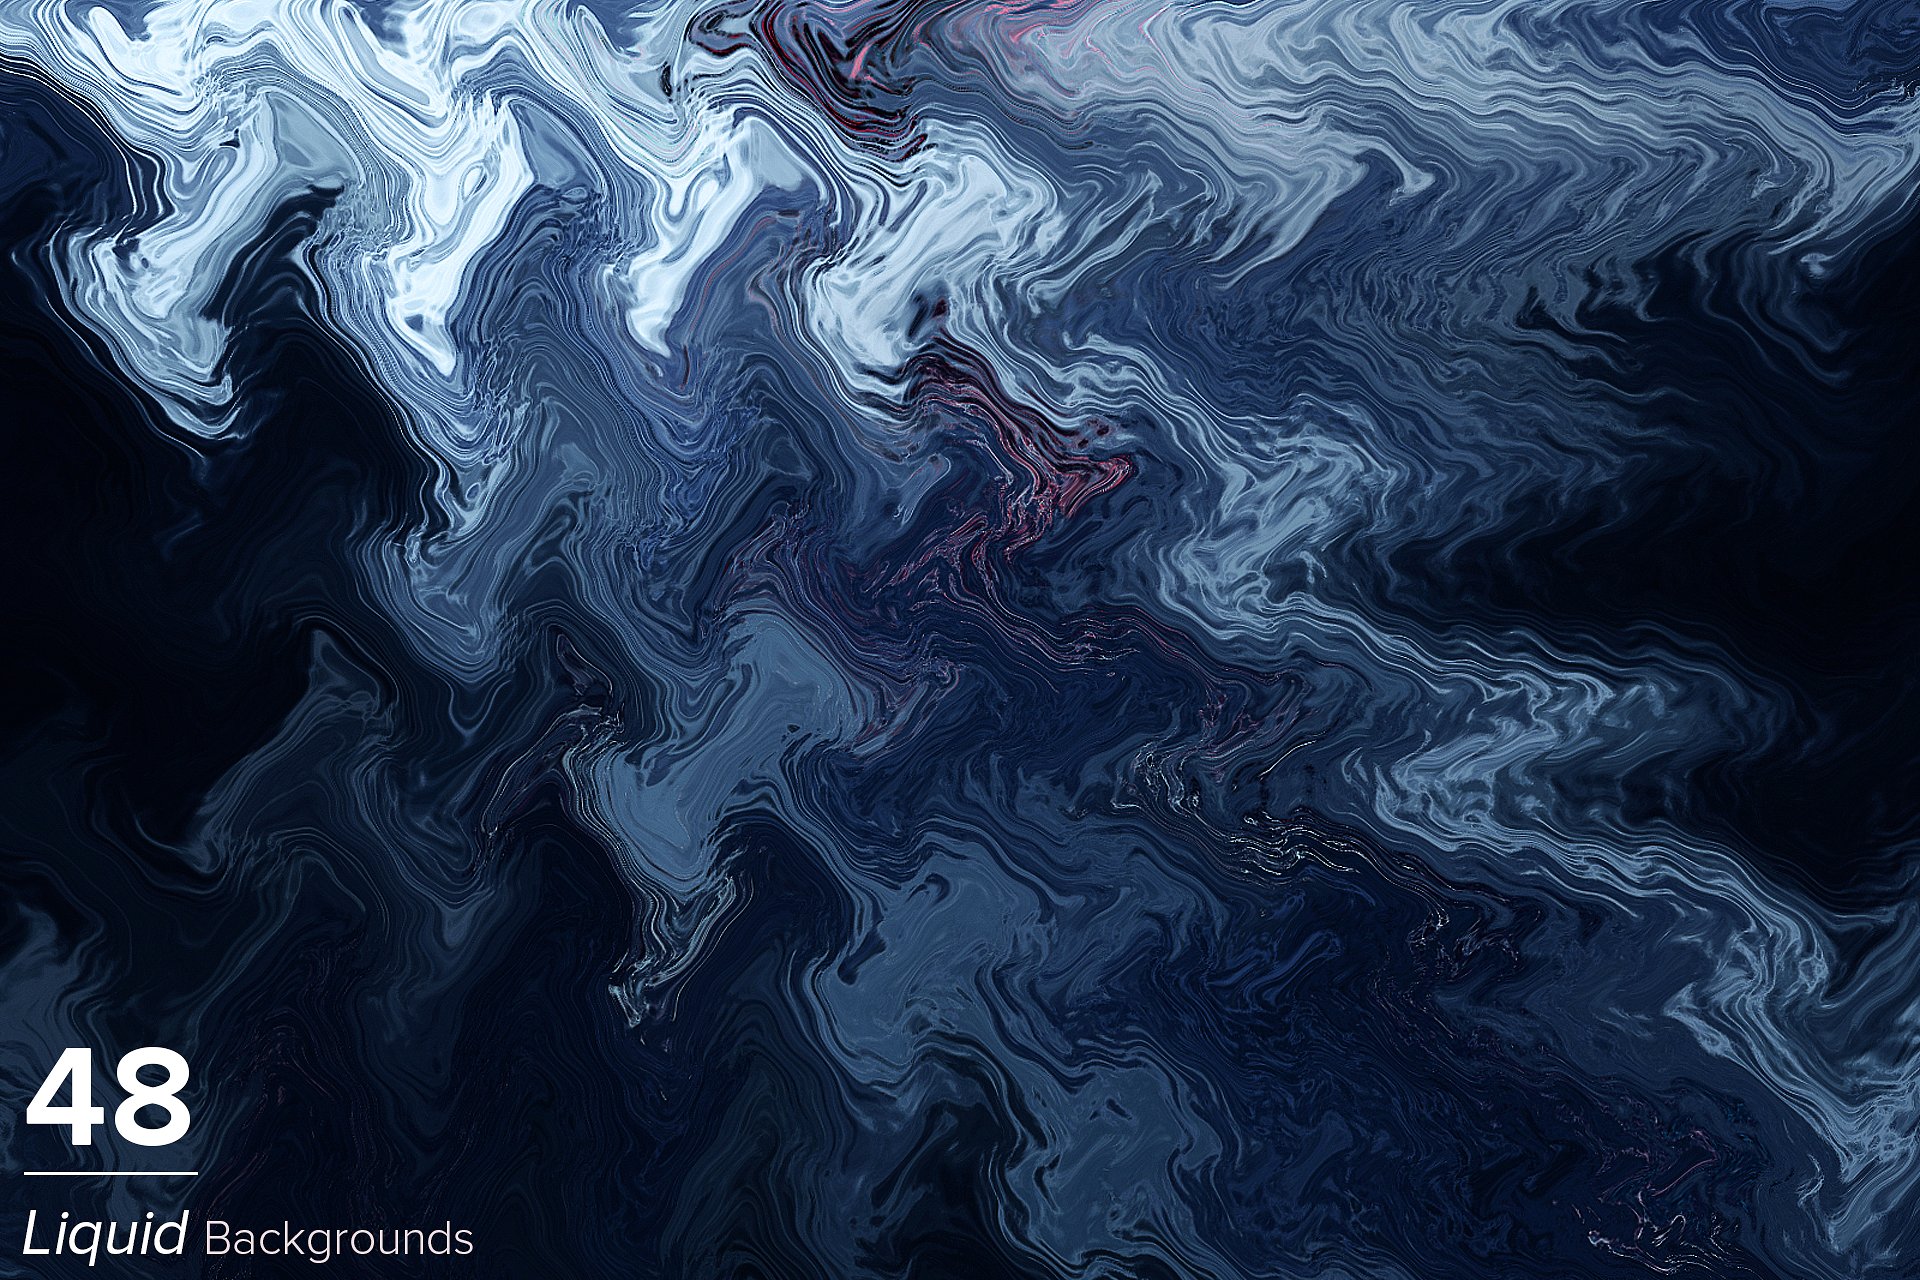 令人敬畏的炫酷复古抽象波浪背景纹理 Awesome Cool Retro Abstract Wavy Background Texture插图